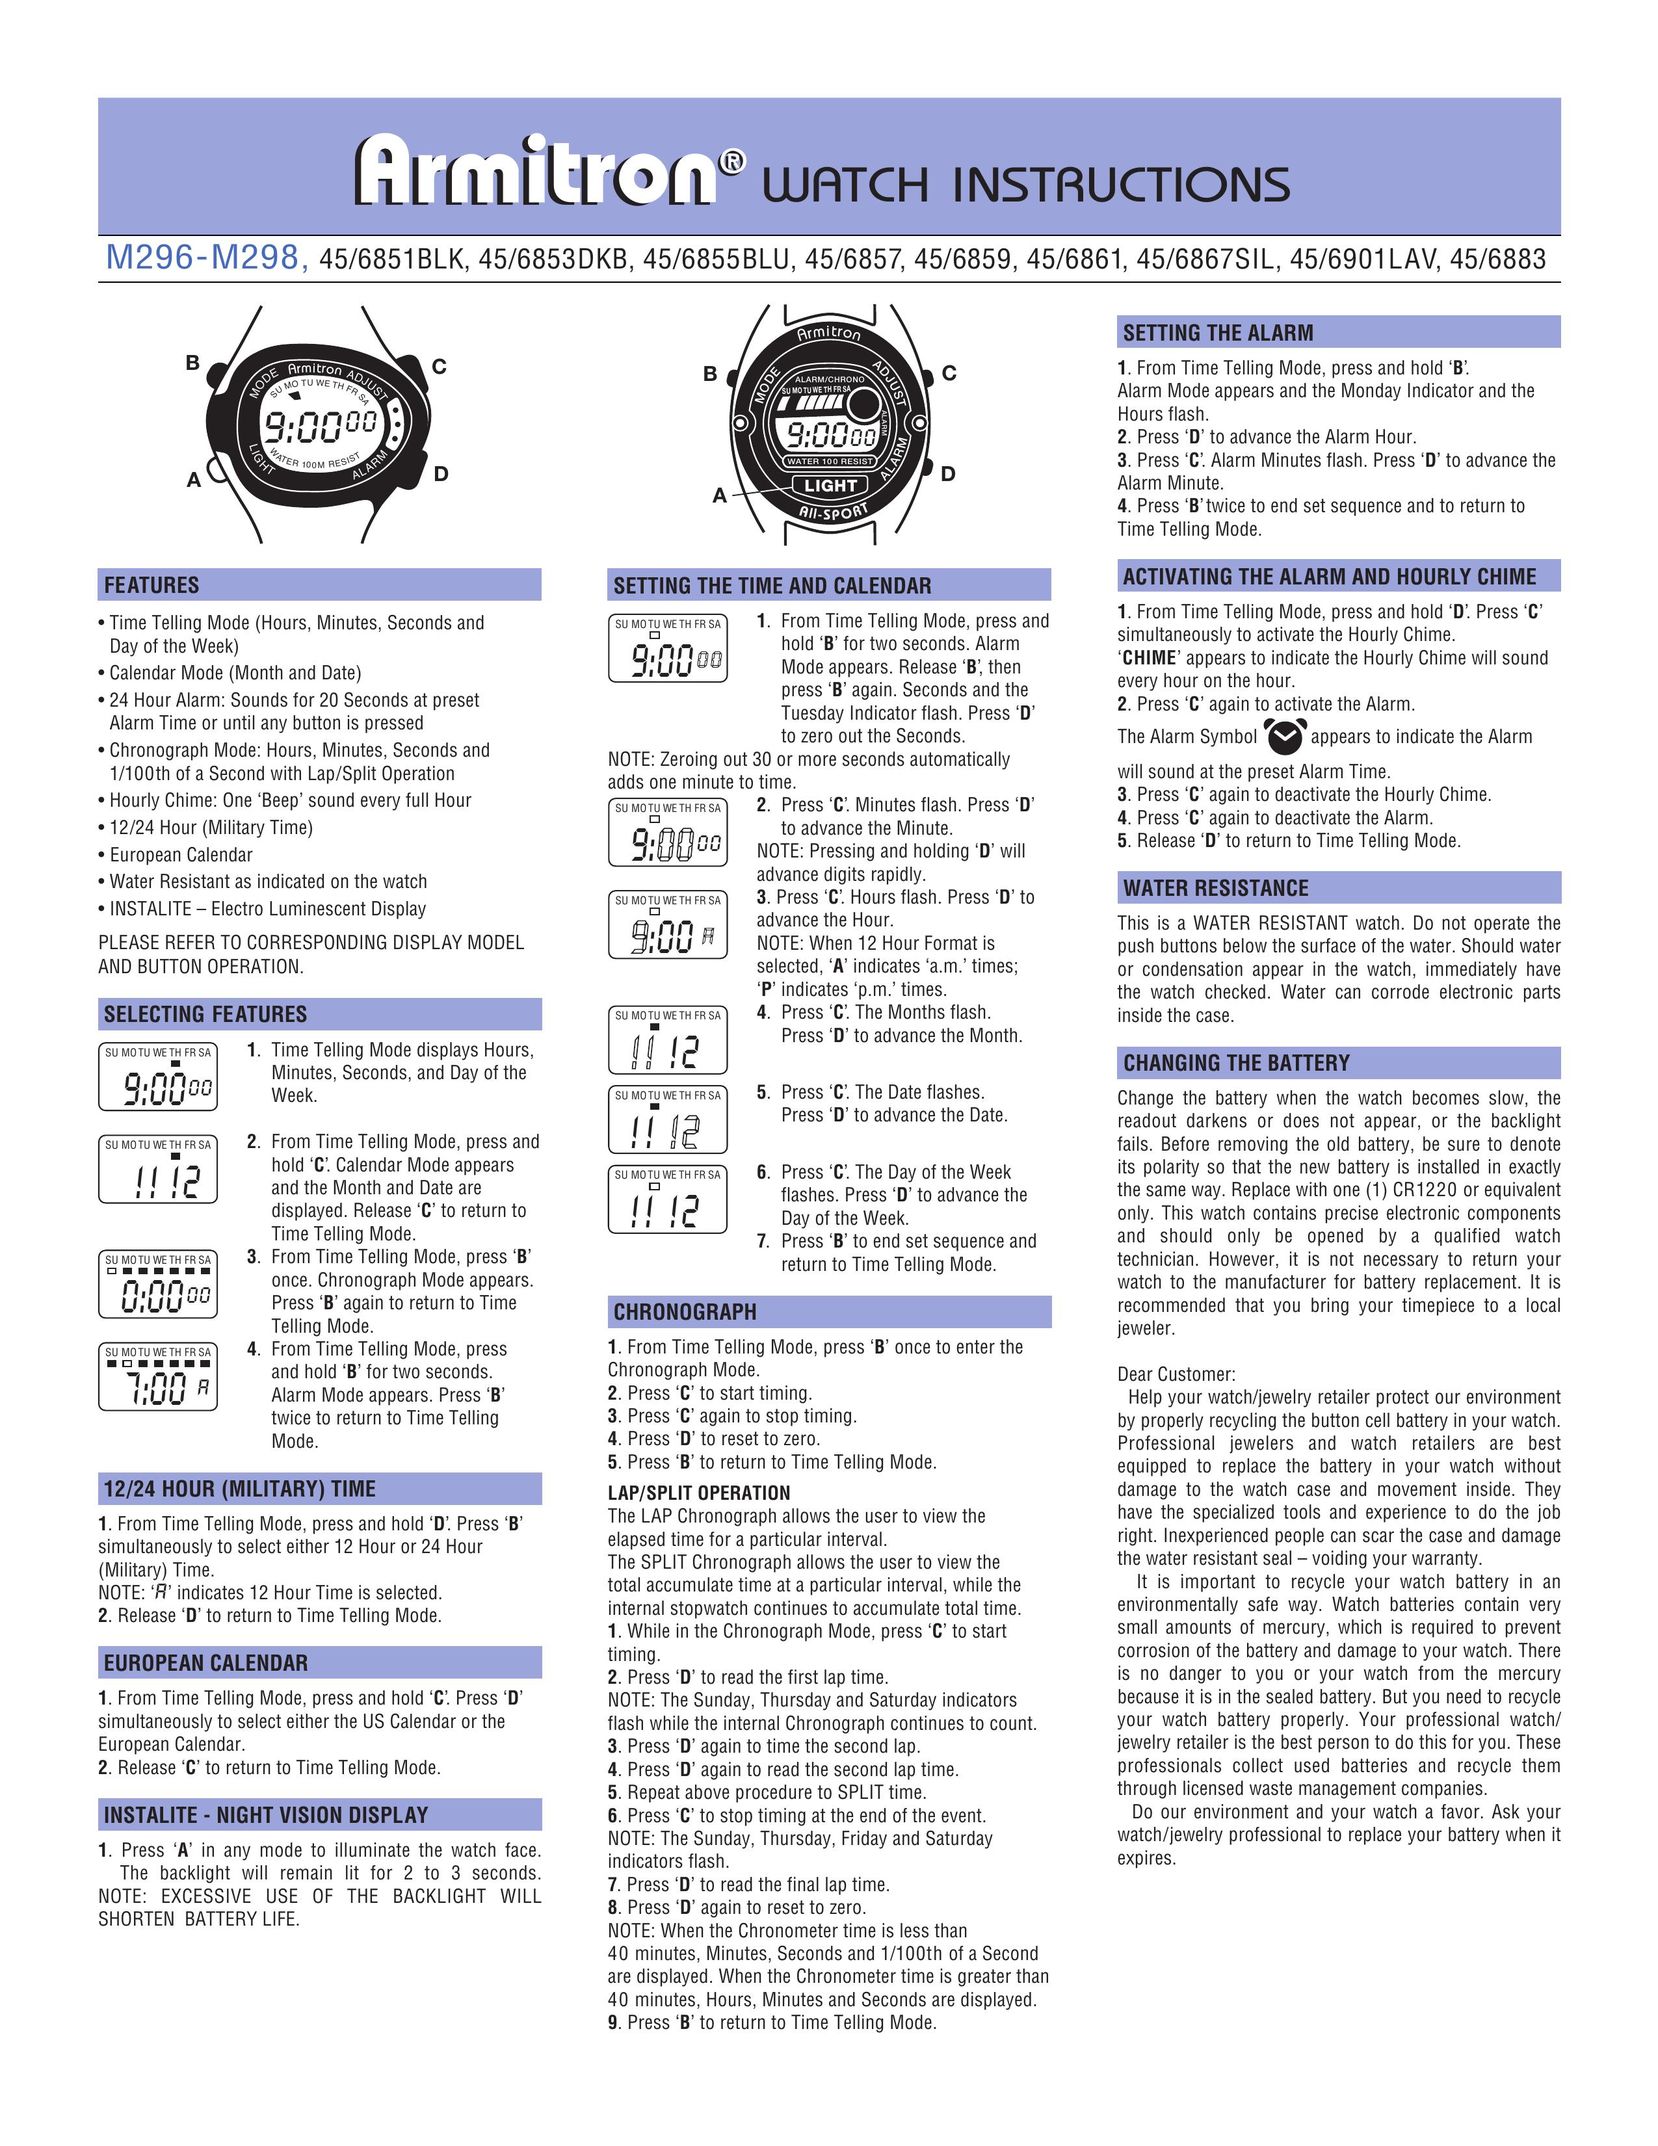 Armitron M296-M298 Watch User Manual